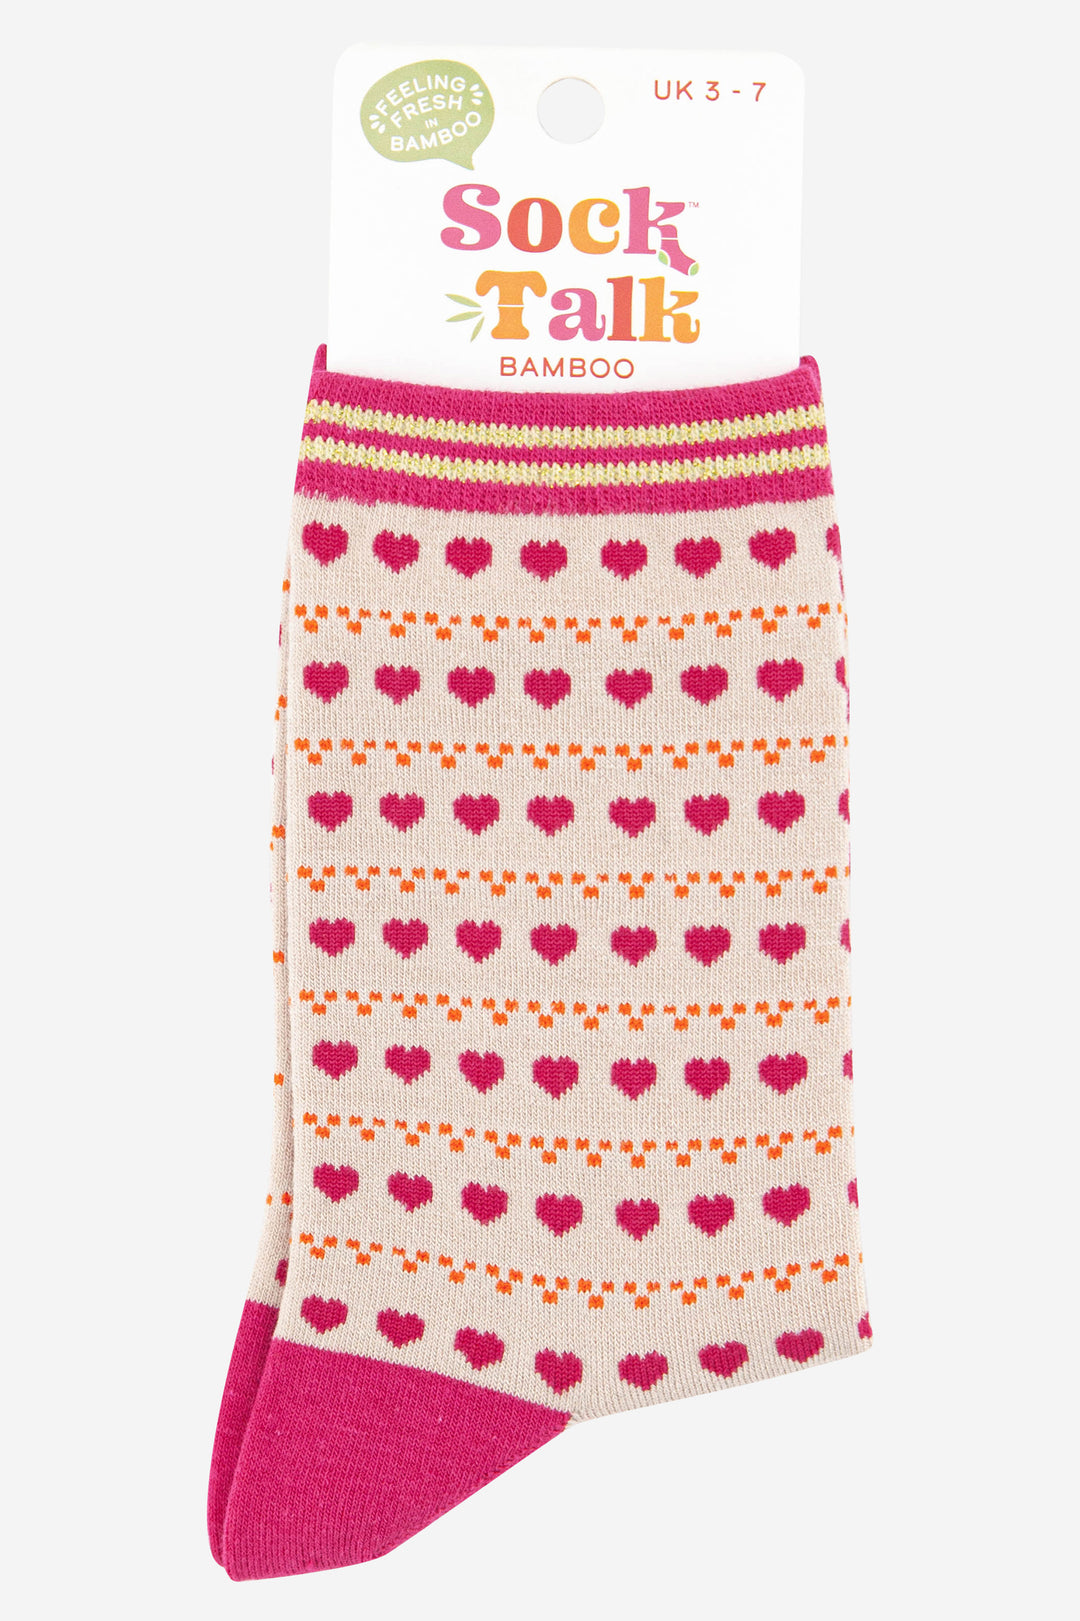 pink love heart ankle socks for women in uk size 3-7